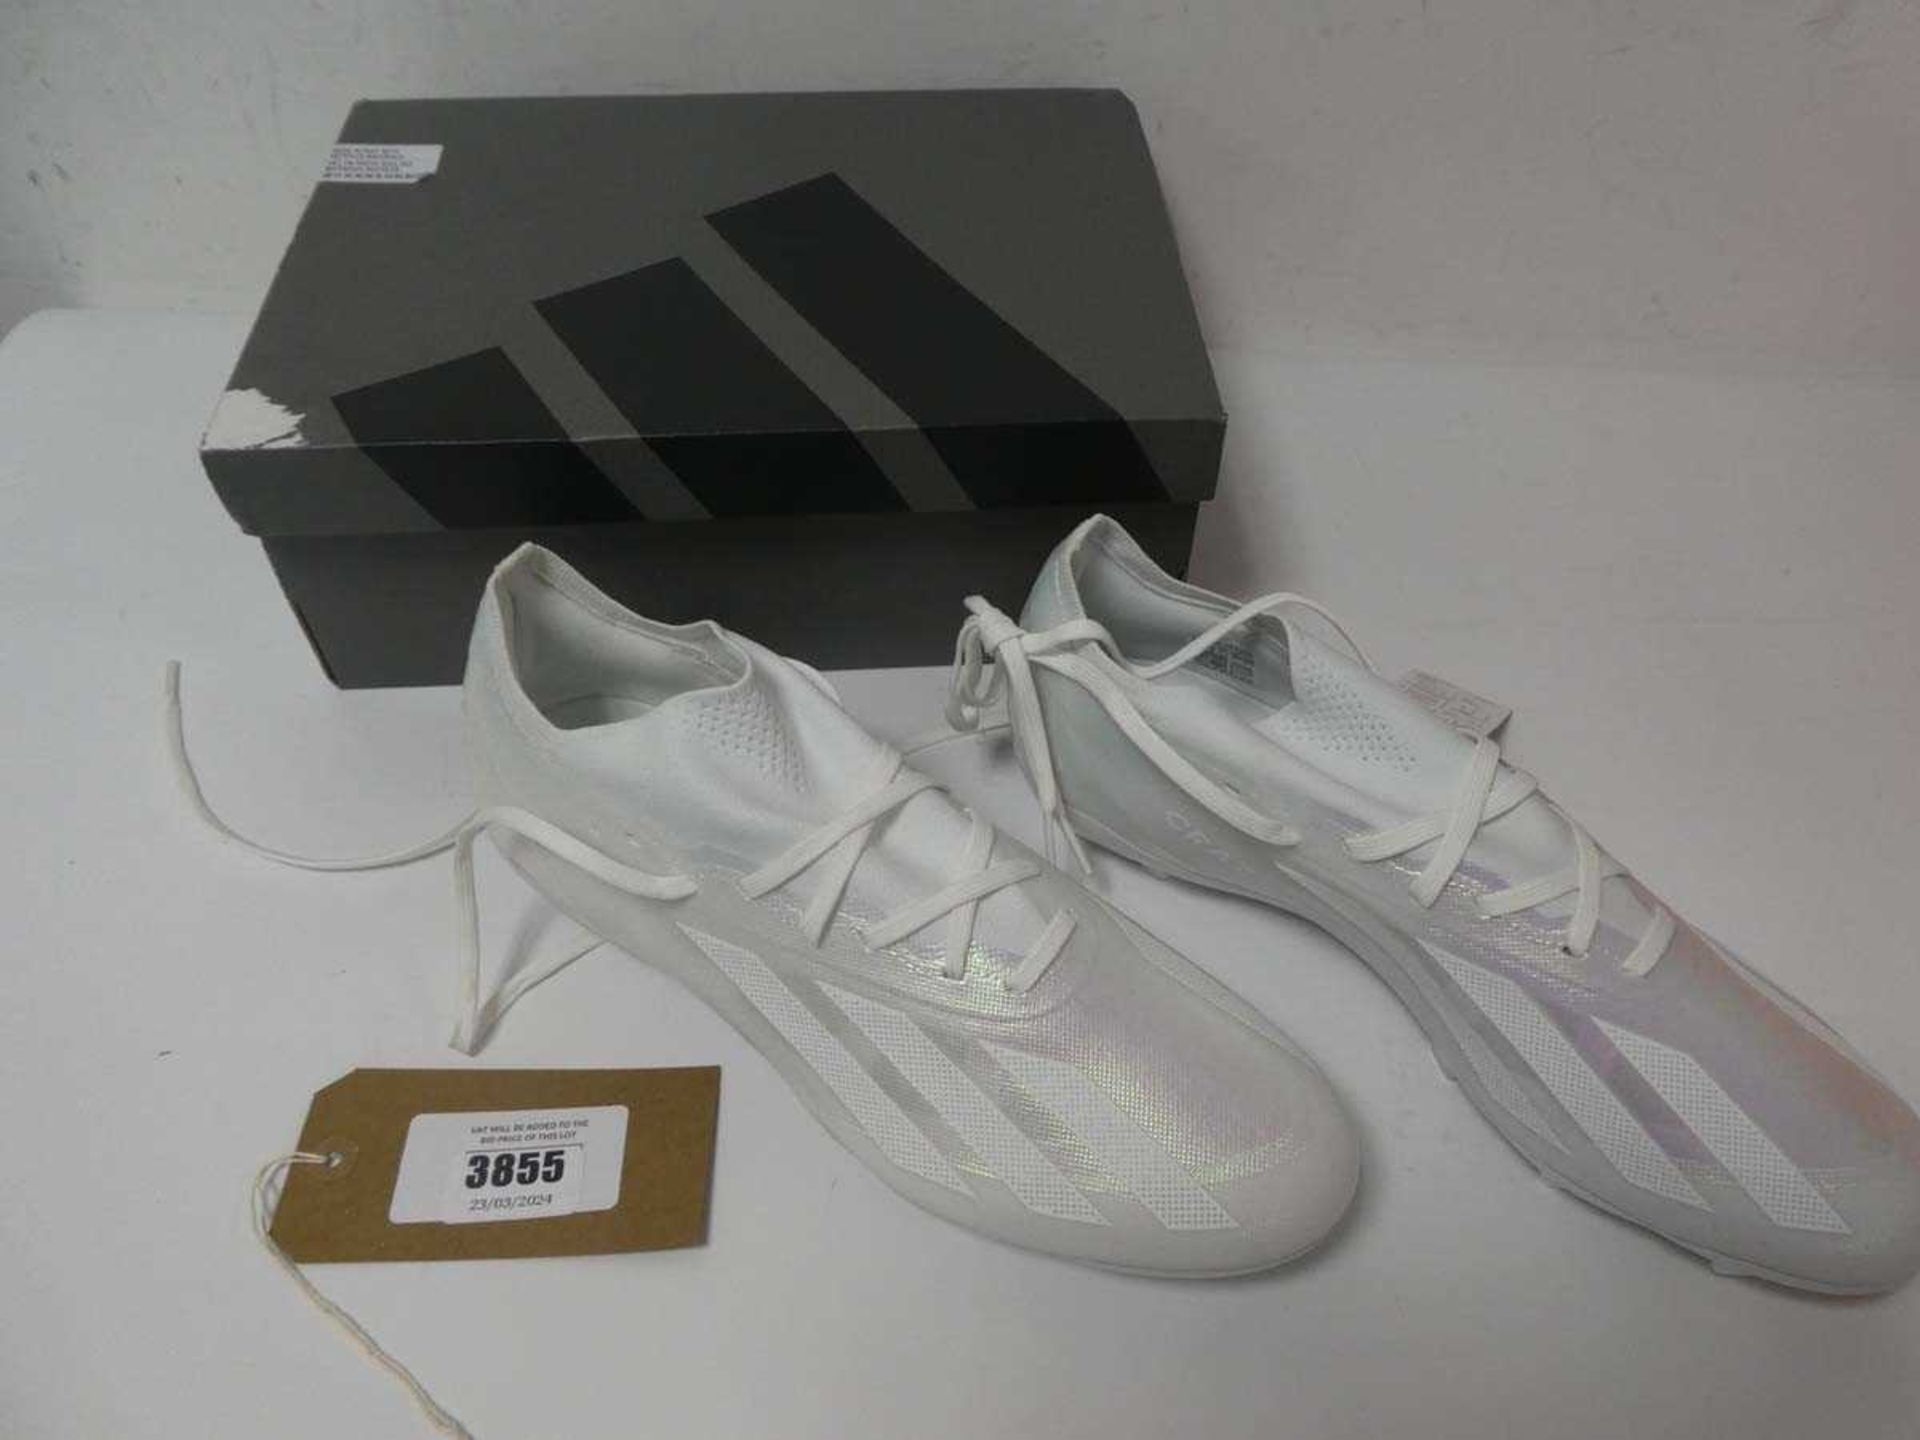 +VAT 1 x Adidas football boots, UK 12